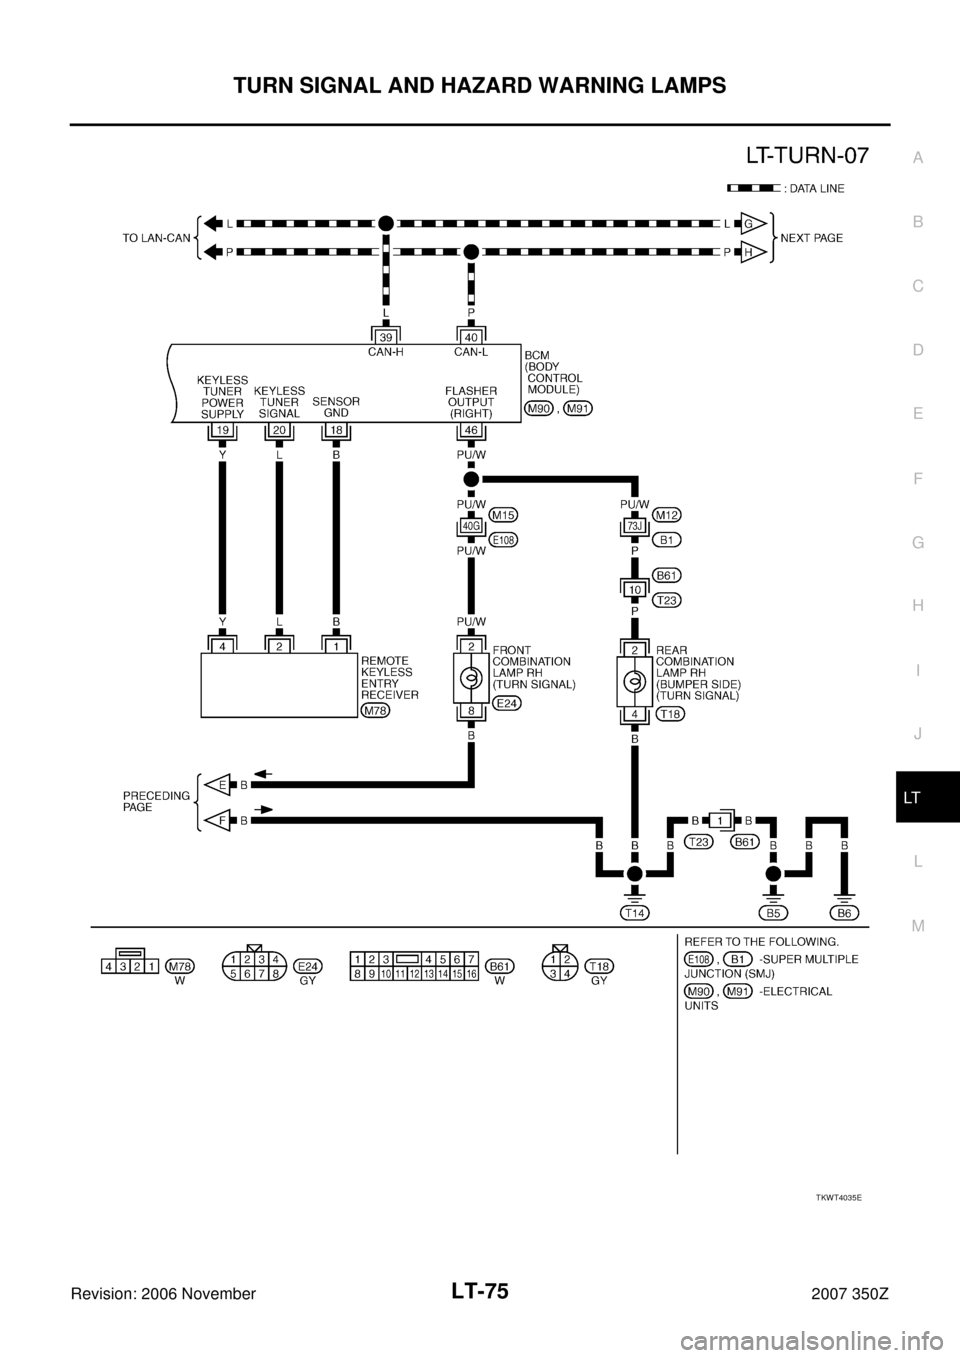 NISSAN 350Z 2007 Z33 Lighting System Manual PDF TURN SIGNAL AND HAZARD WARNING LAMPS
LT-75
C
D
E
F
G
H
I
J
L
MA
B
LT
Revision: 2006 November2007 350Z
TKWT4035E 